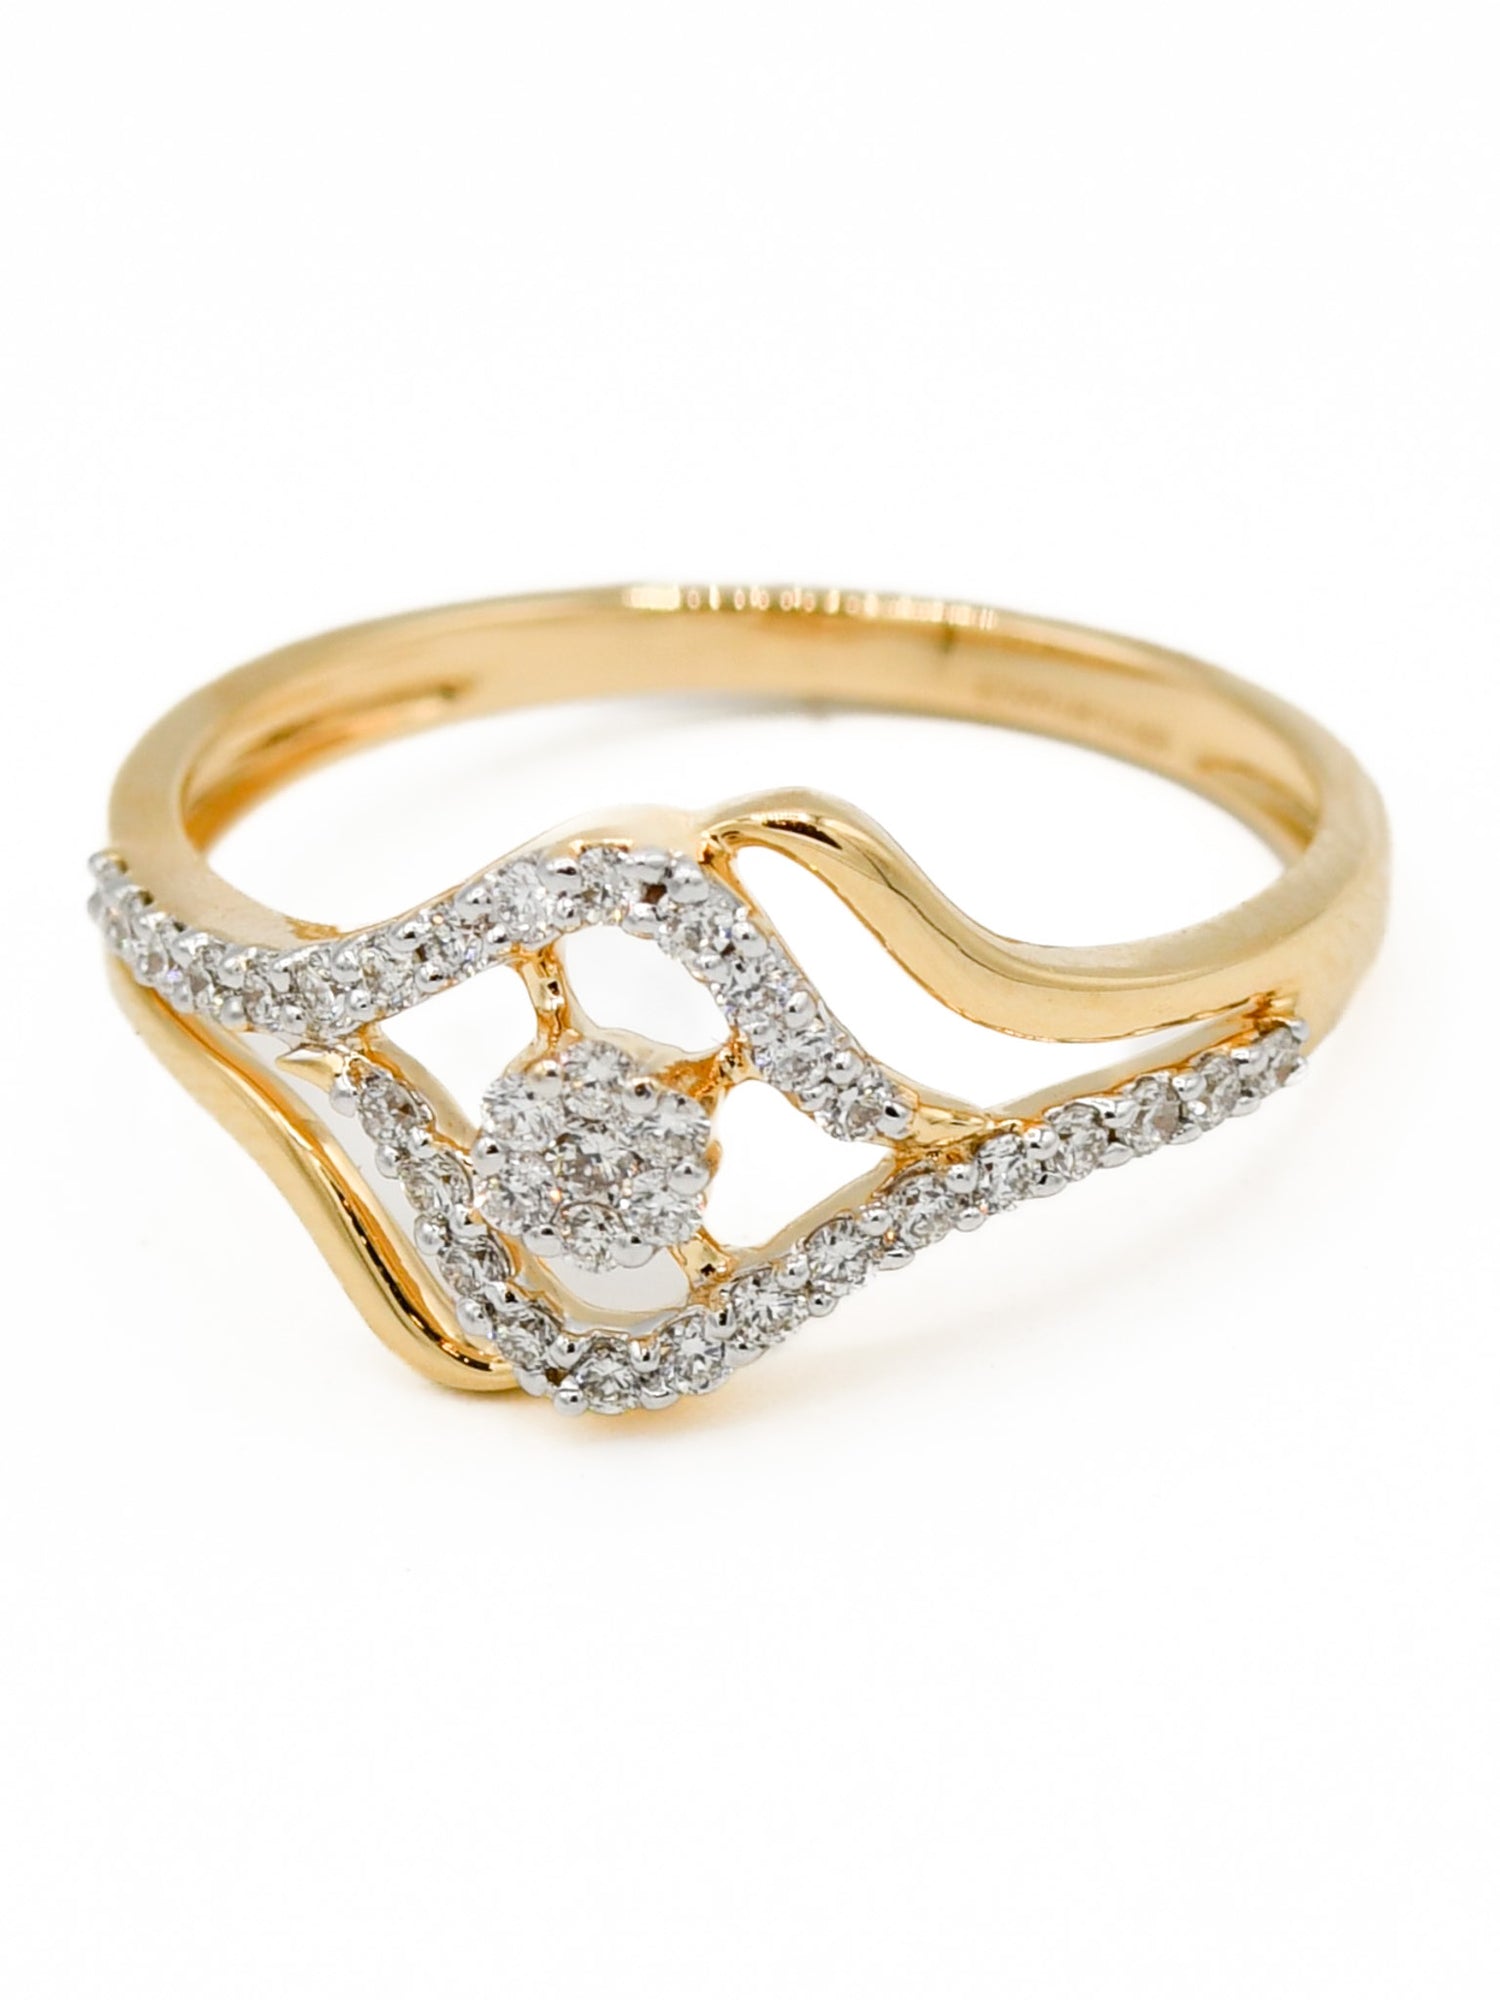 18ct Gold 0.29ct Diamond Ladies Ring - Roop Darshan